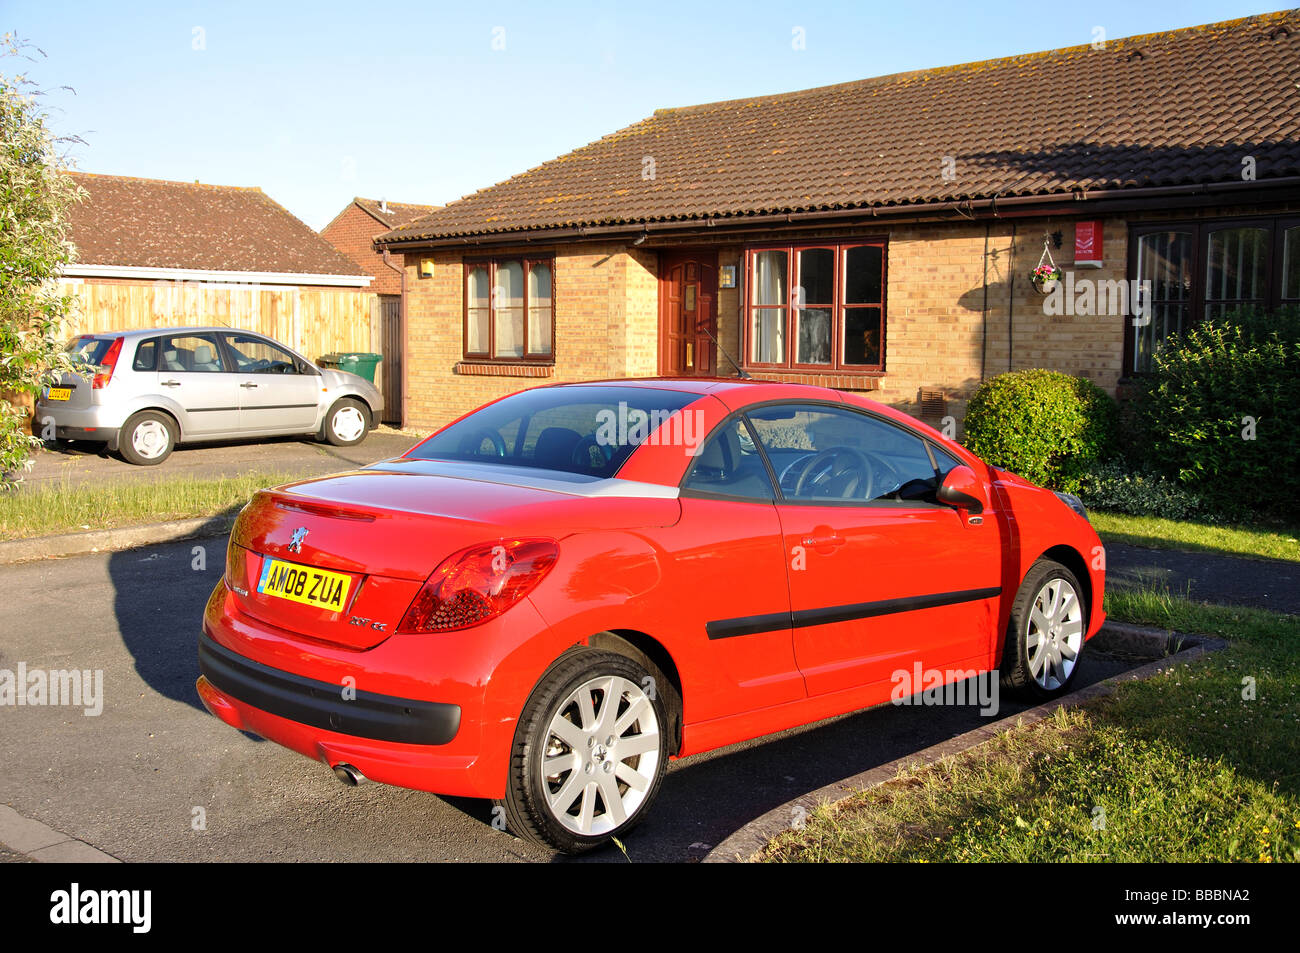 Car outside house, Stanwell Moor, Surrey, England, United Kingdom Stock Photo